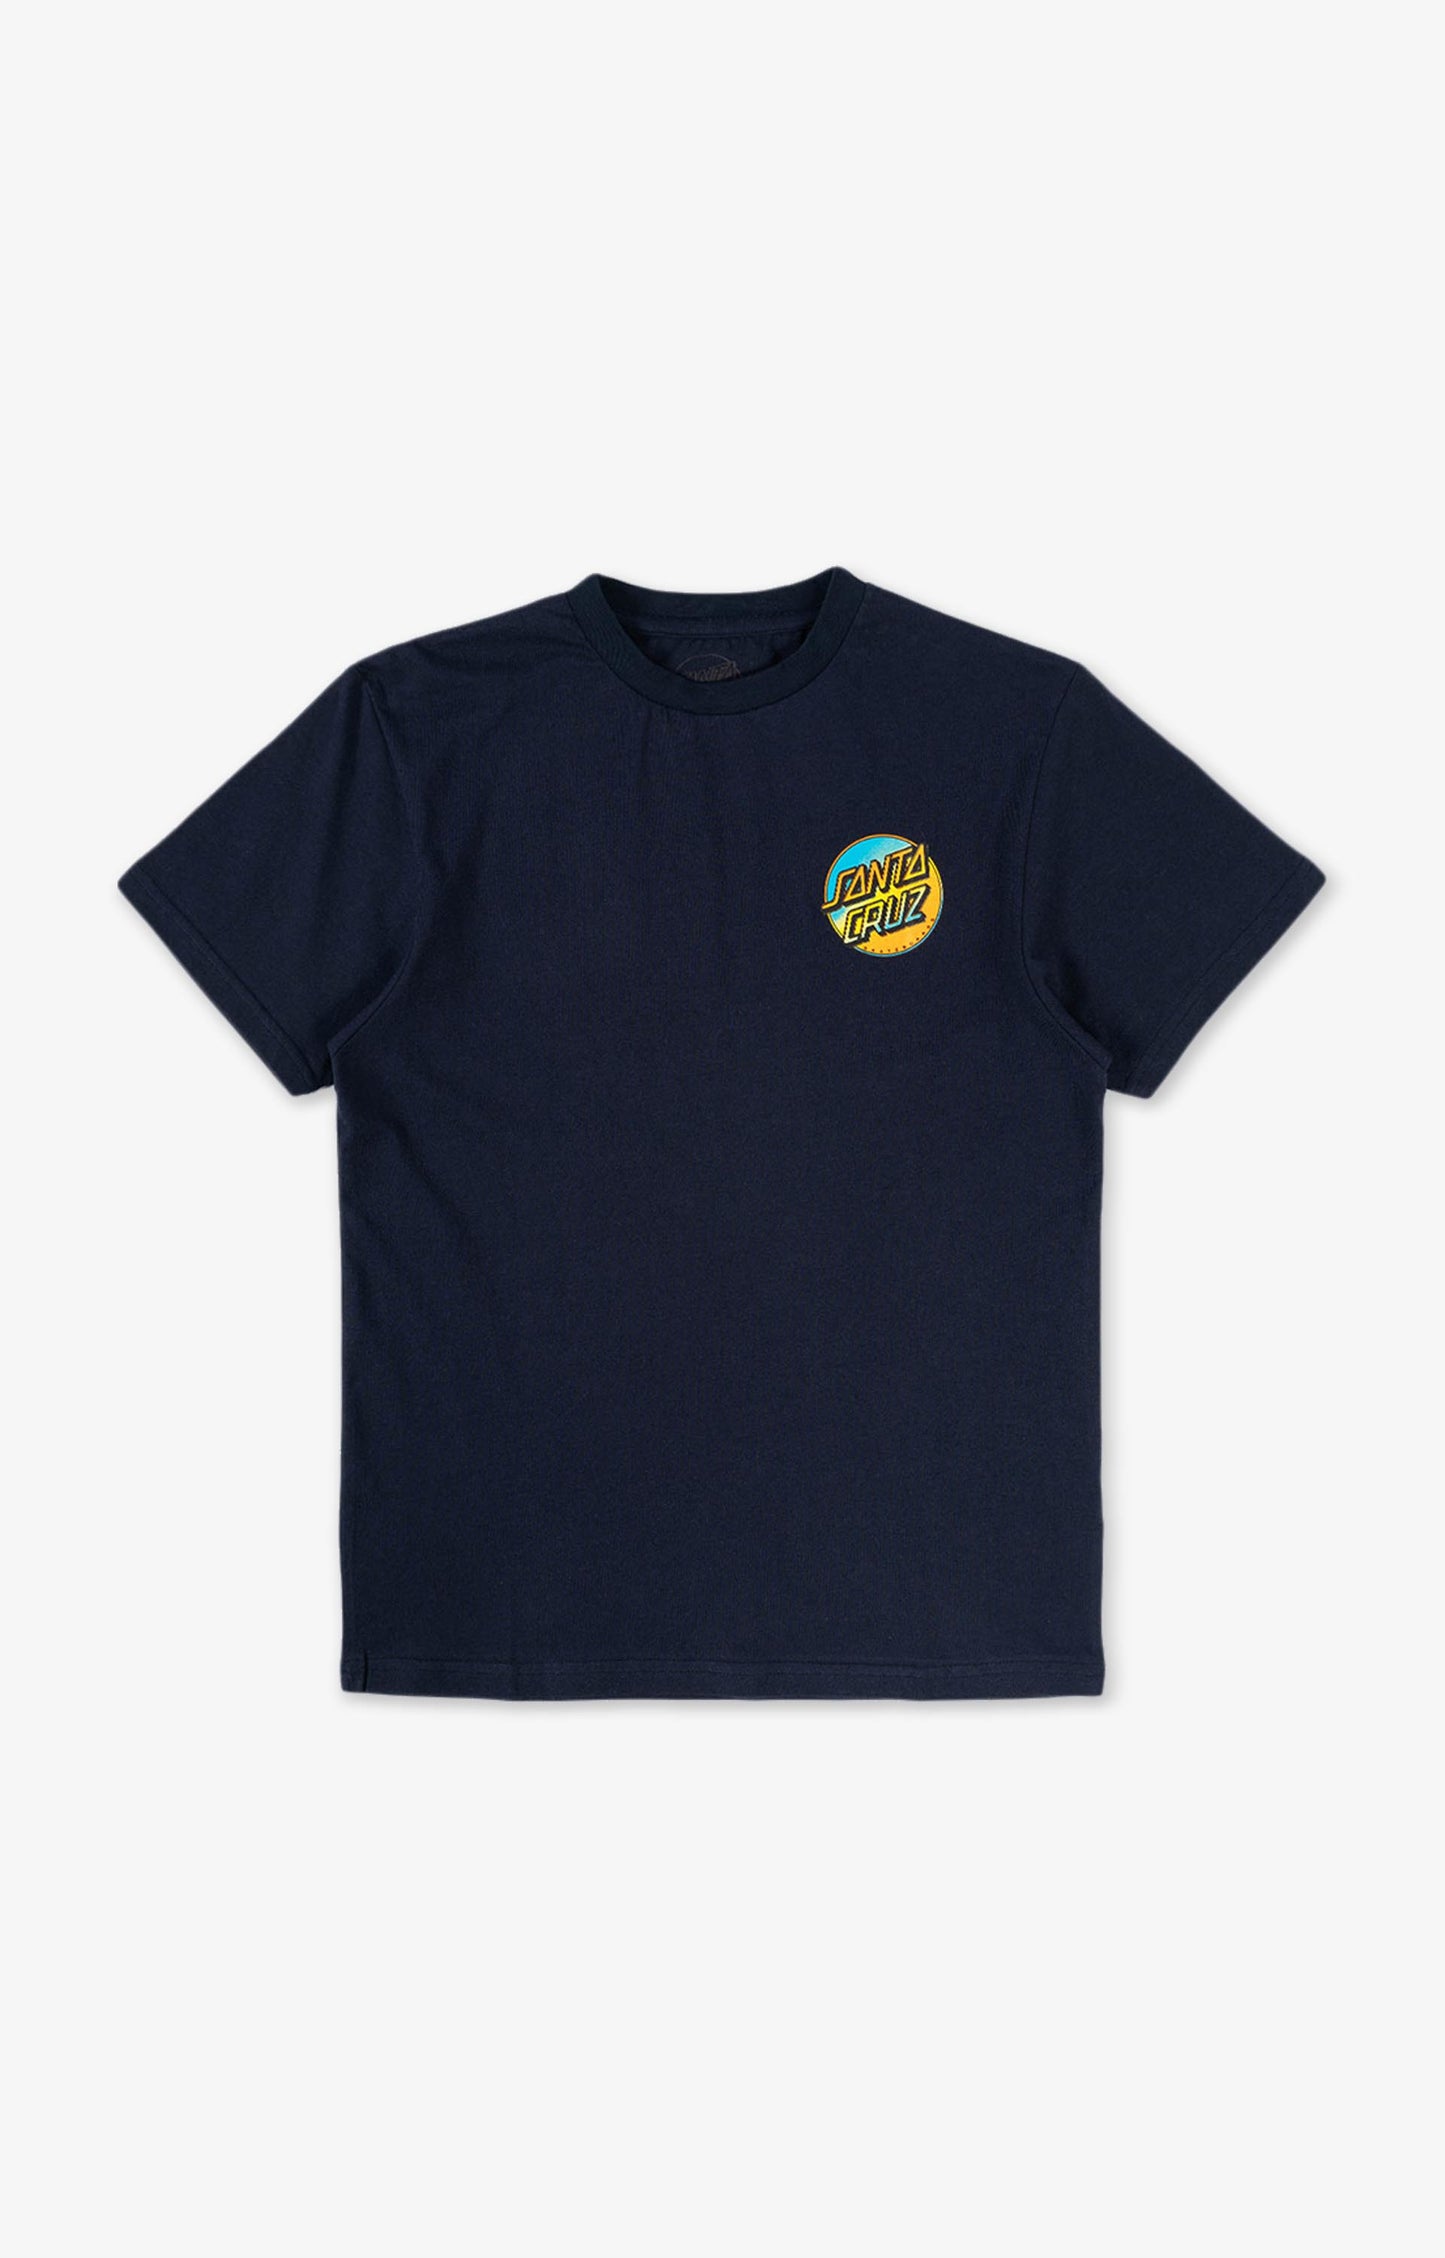 Santa Cruz Contra Dot Youth T-Shirt, Navy